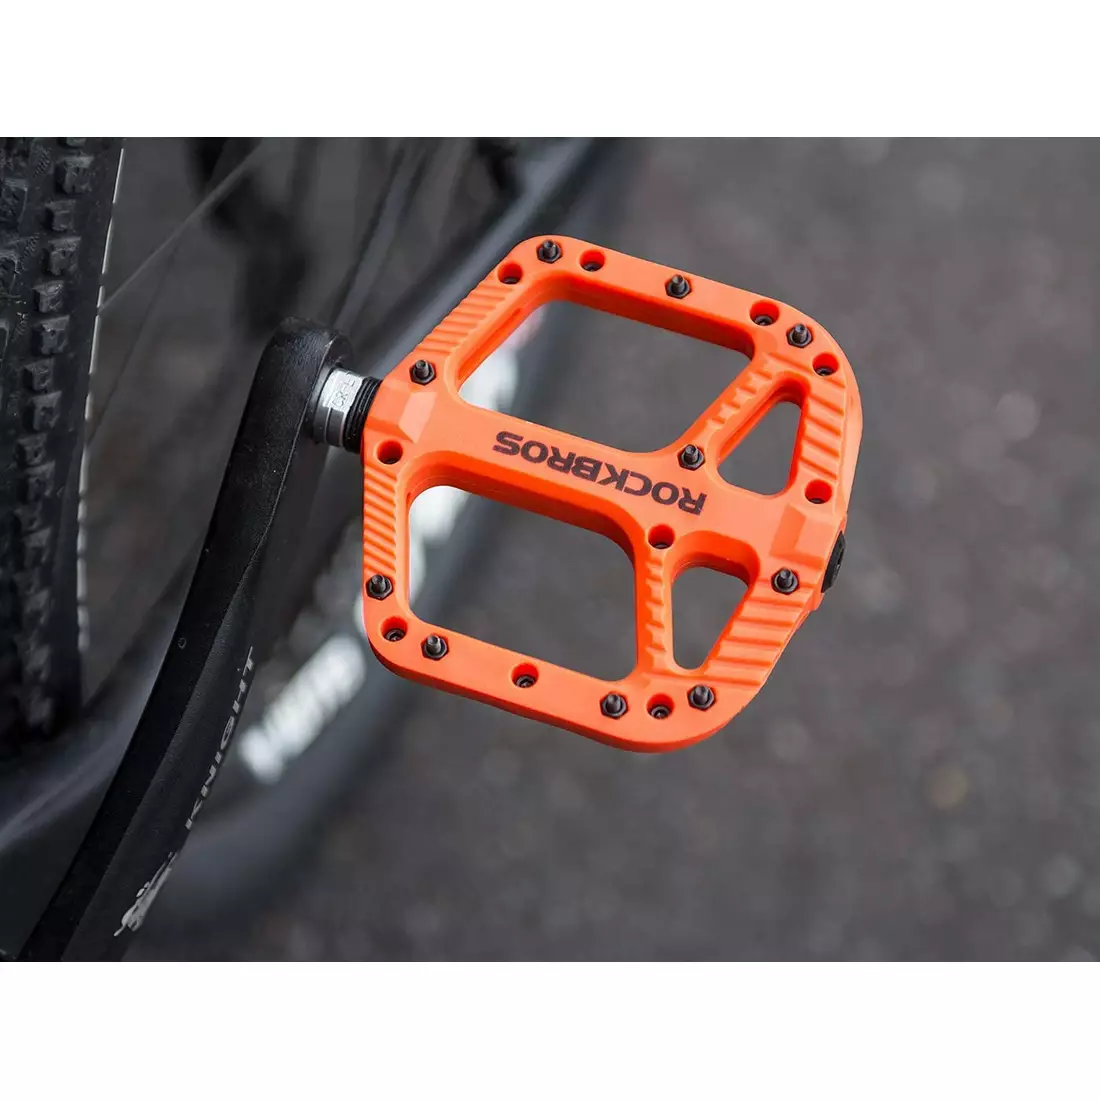 Rockbros platform pedals nylon orange 2018-12AOR